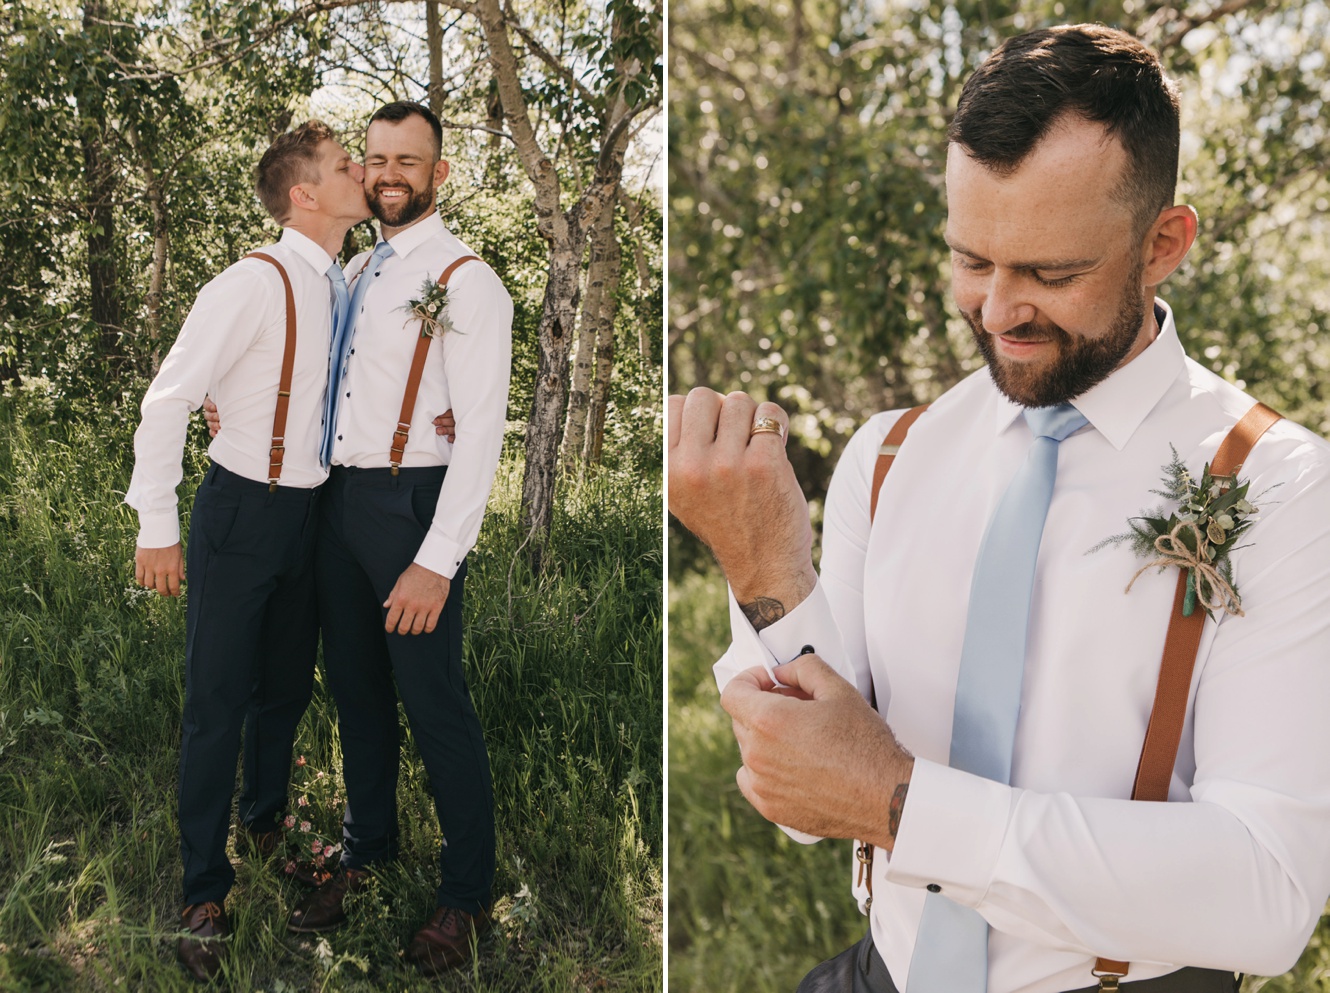 Best man pranks groom at first look photo